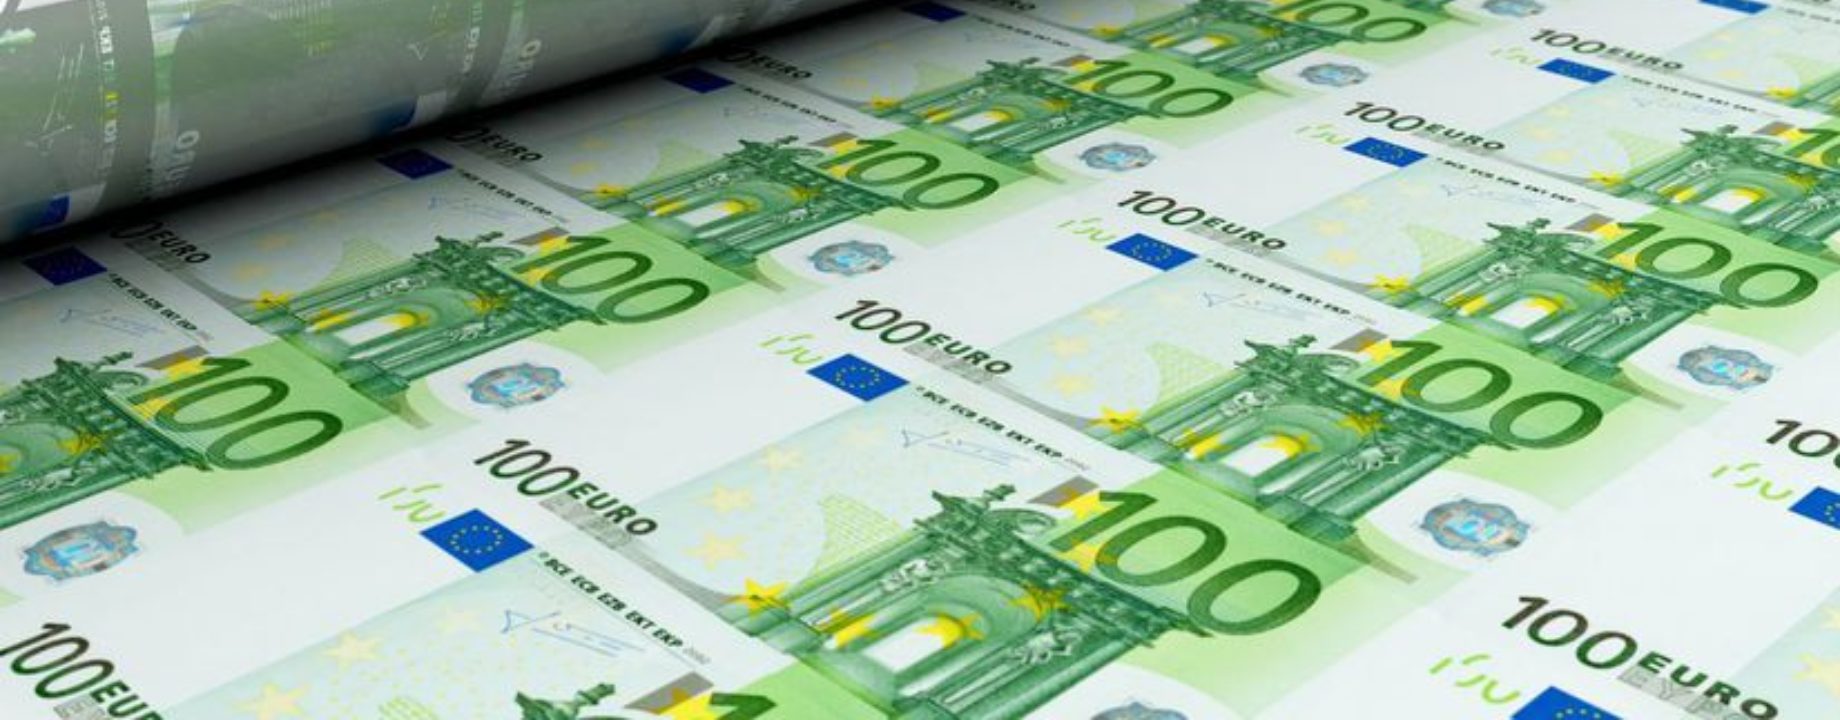 100 eur bankovky peniaze tlacenie penazi clanok W